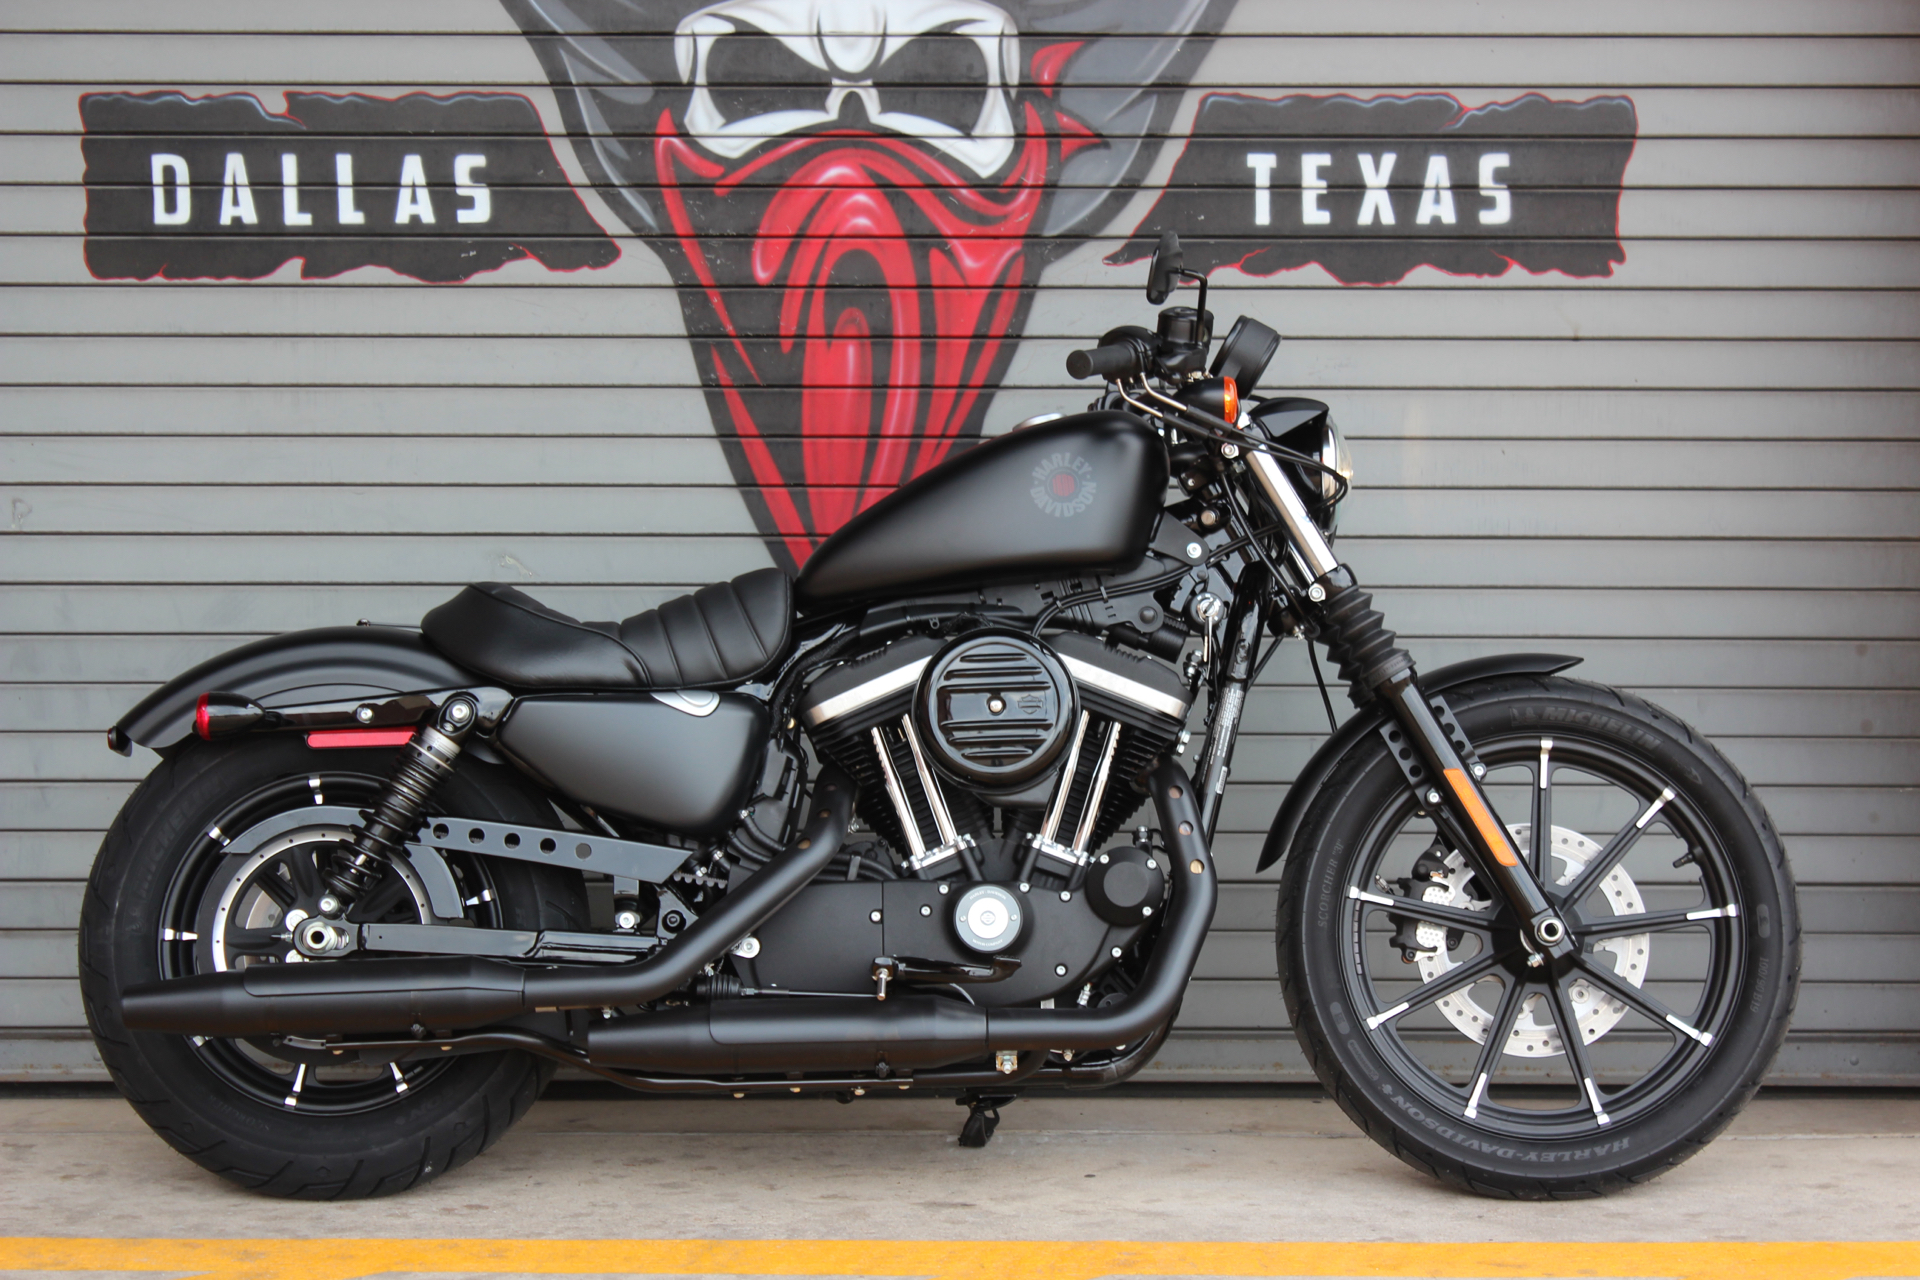 2022 Harley-Davidson Iron 883™ in Carrollton, Texas - Photo 3